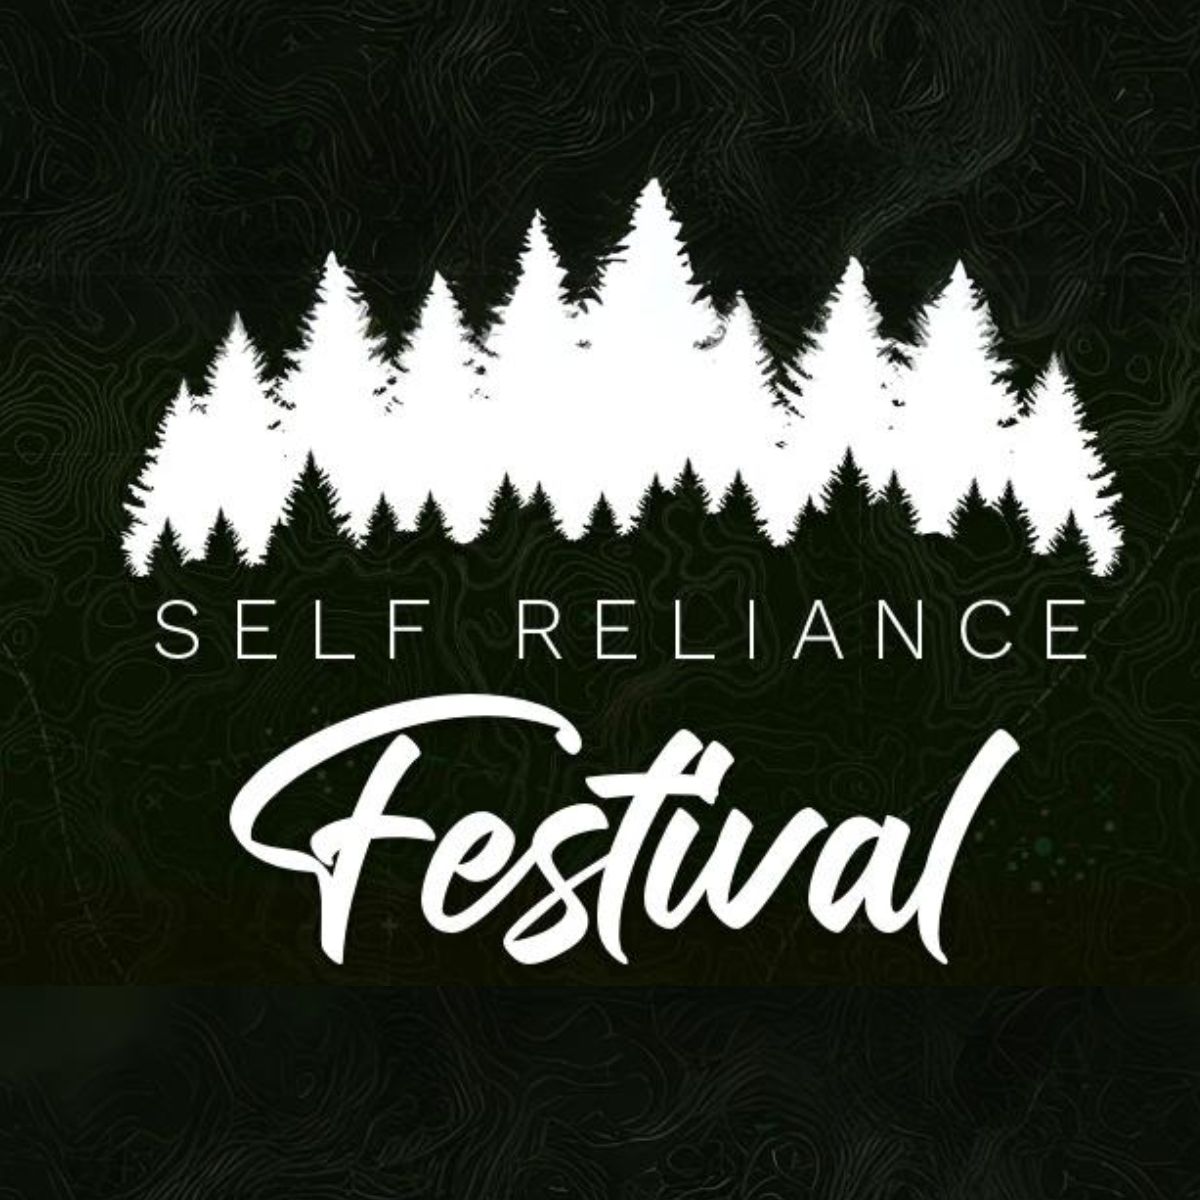 Self Reliance Festival